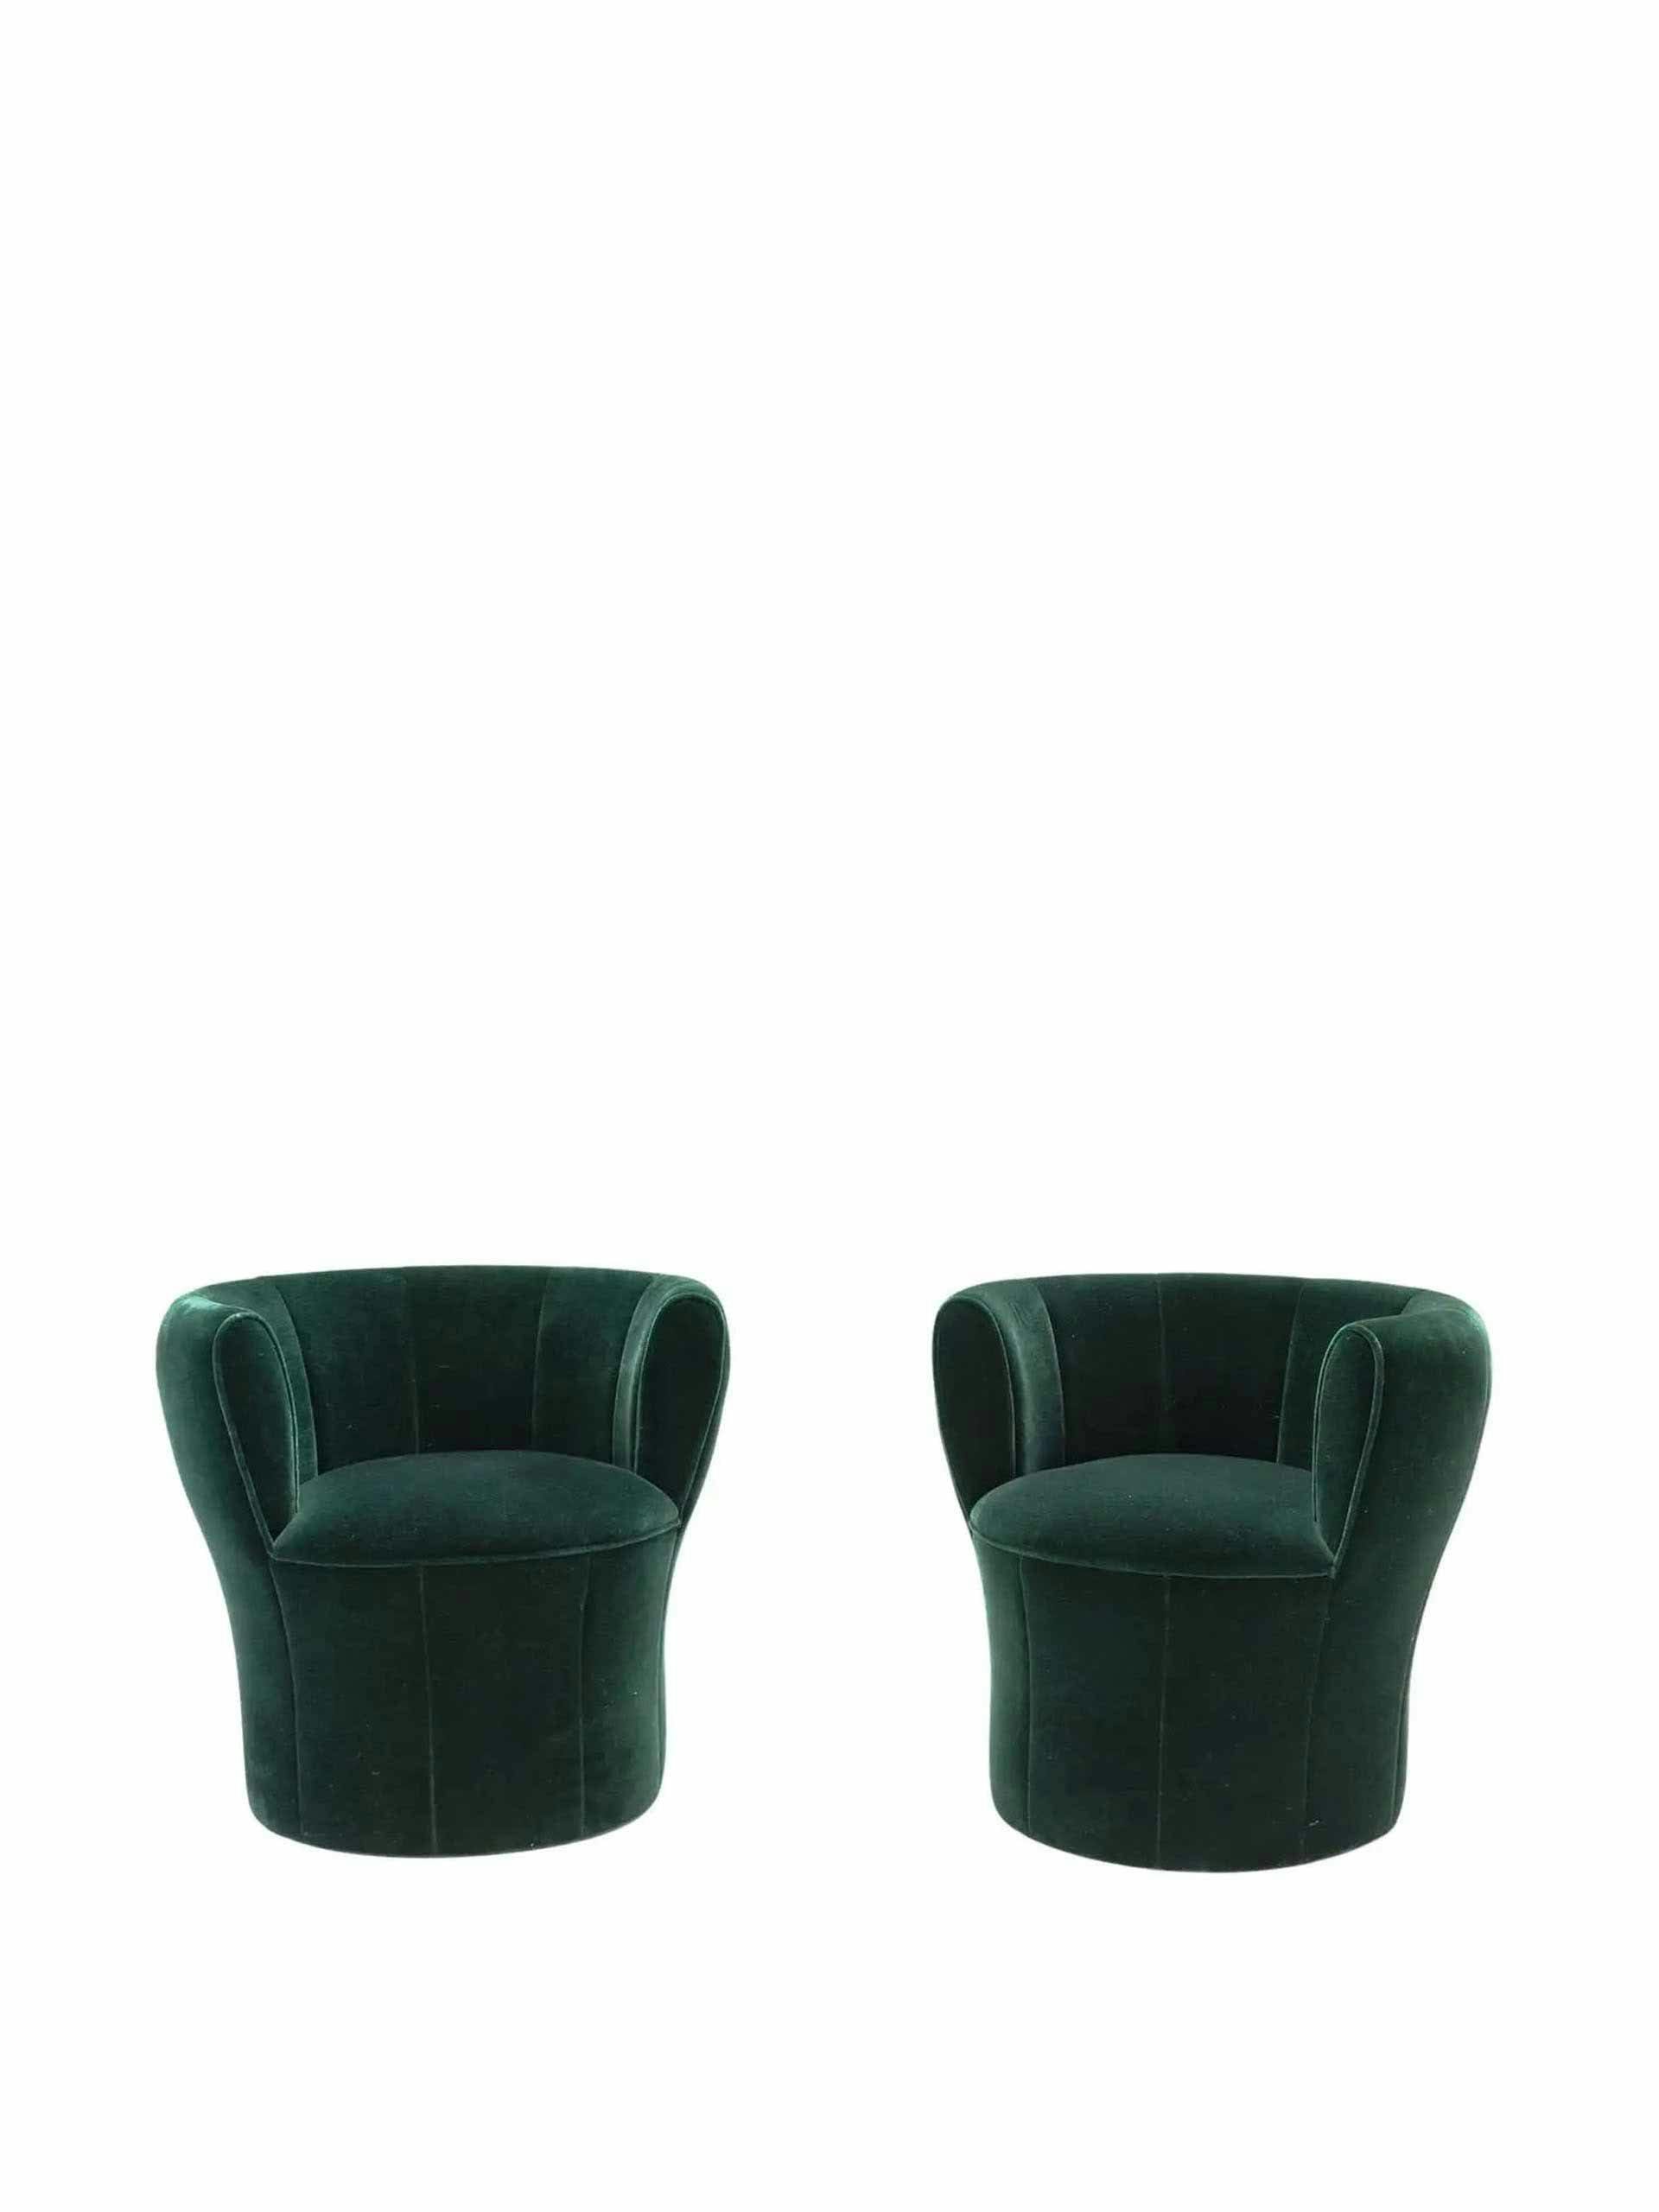 Green velvet chairs (set of two)